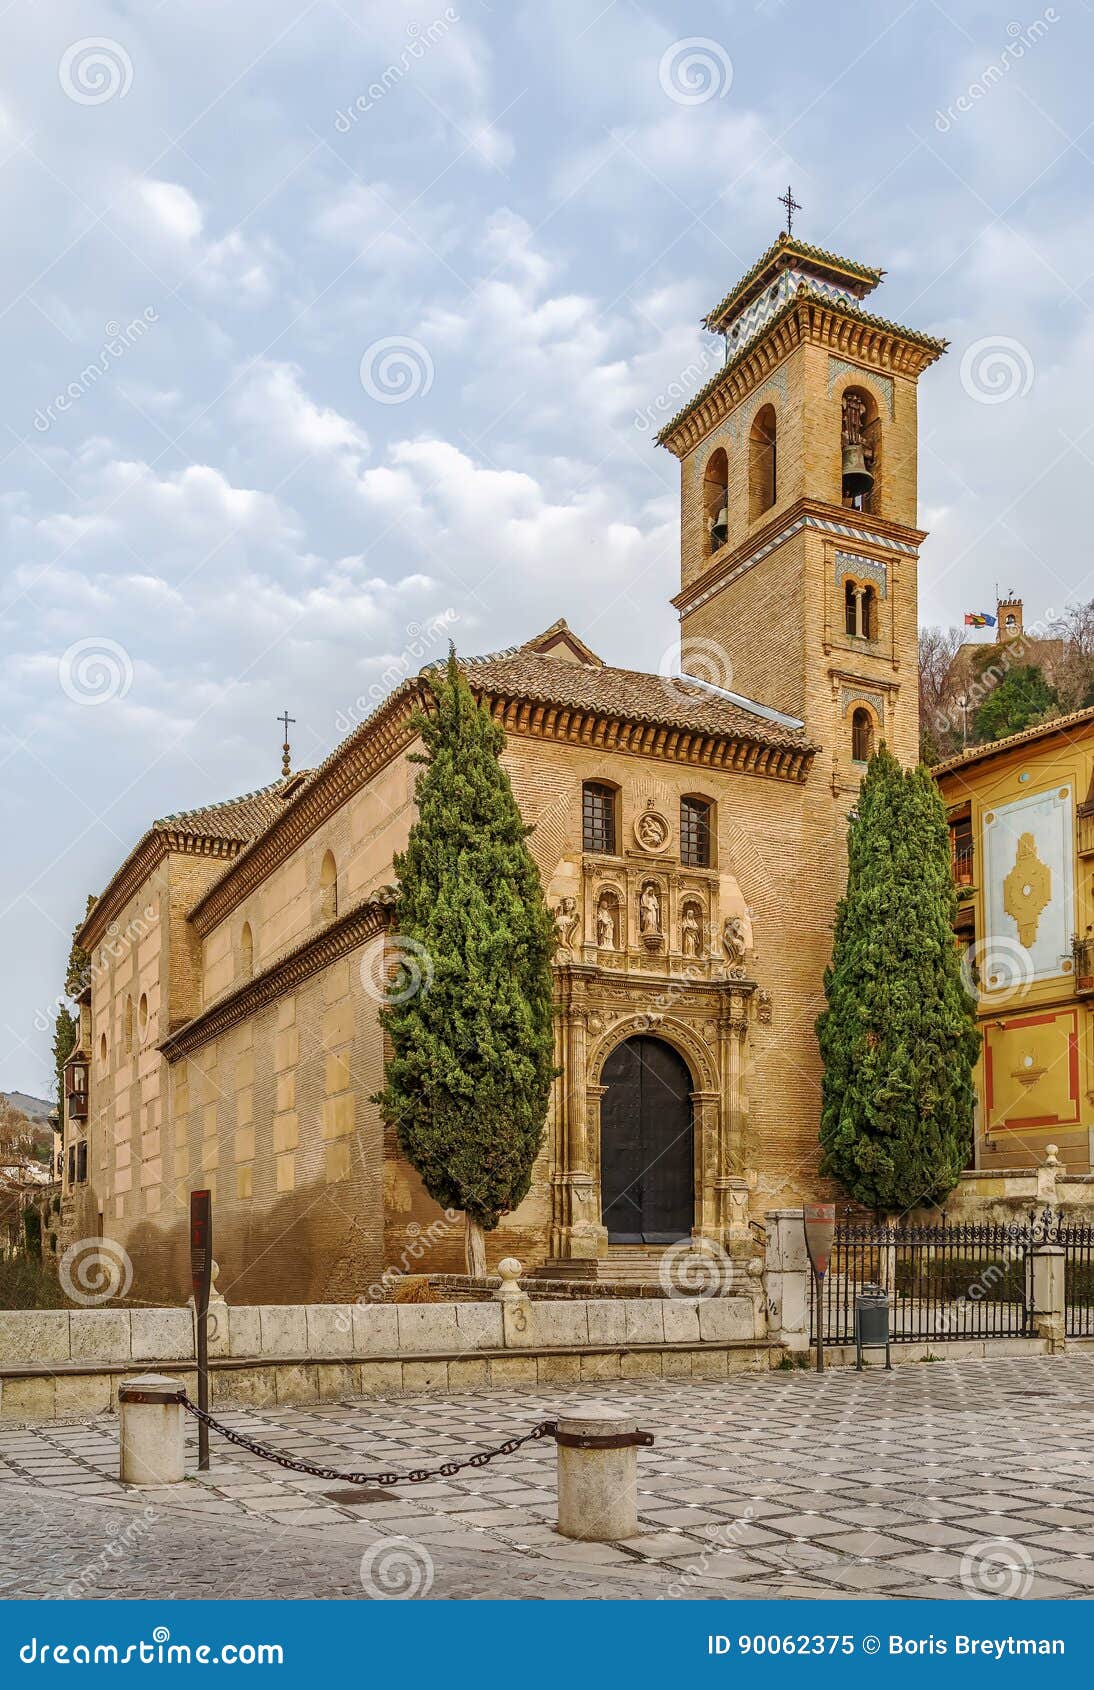 church of san gil and santa ana, granada, spain